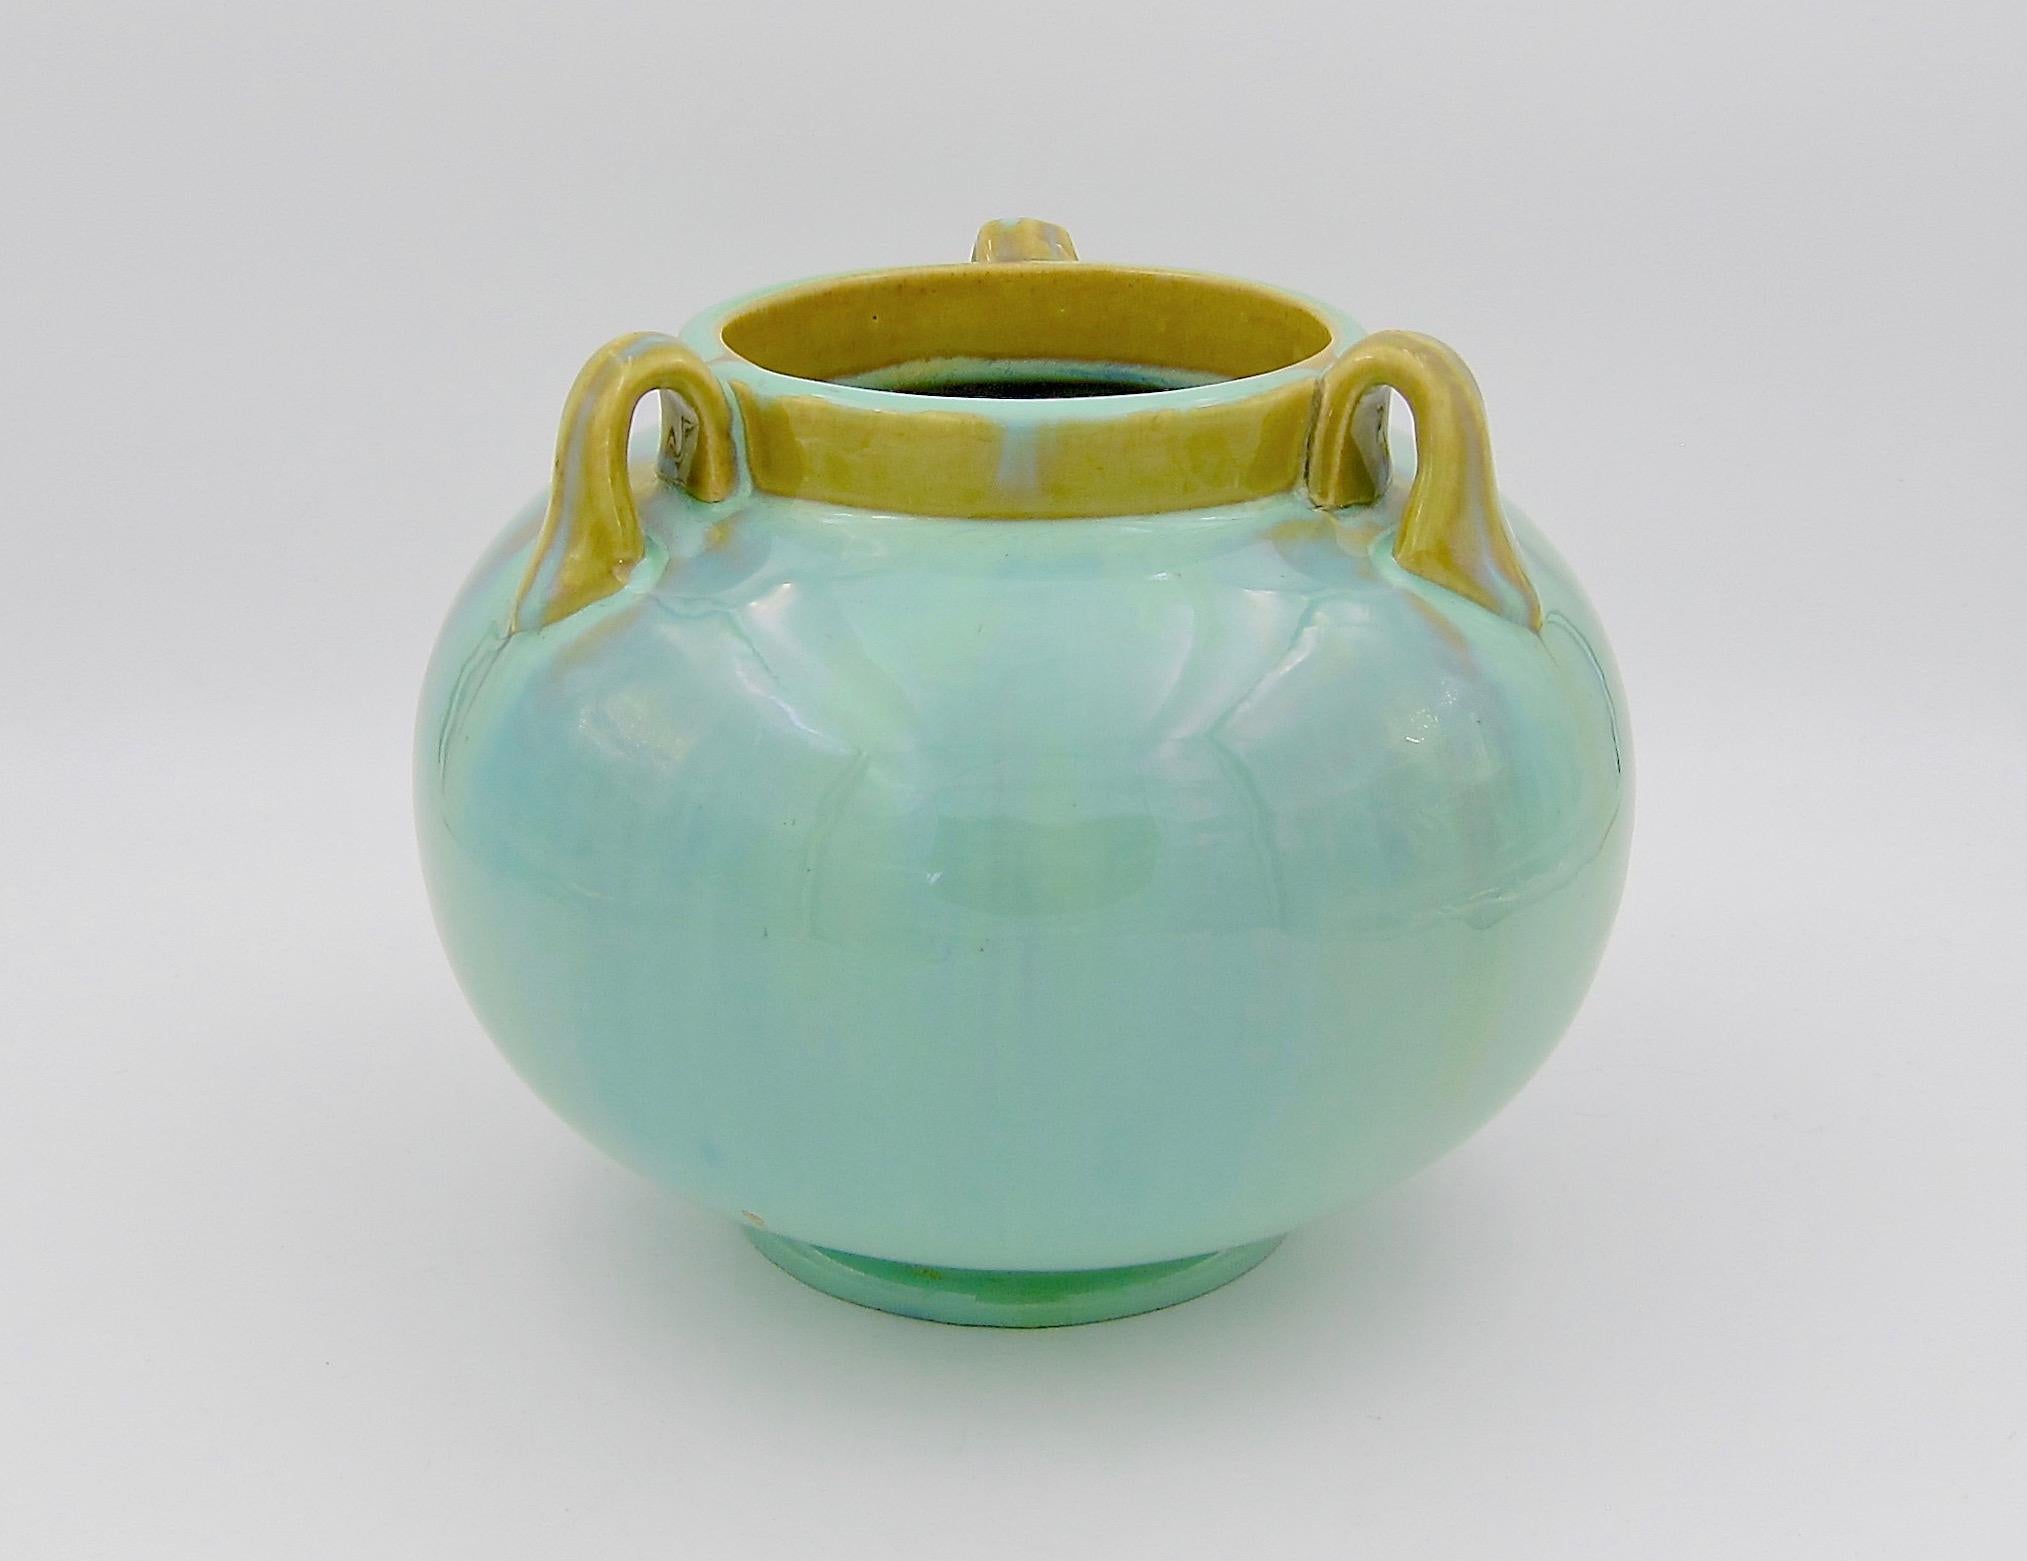 20th Century Vintage Fulper Pottery Three Handled Vase with a Flambé Glaze